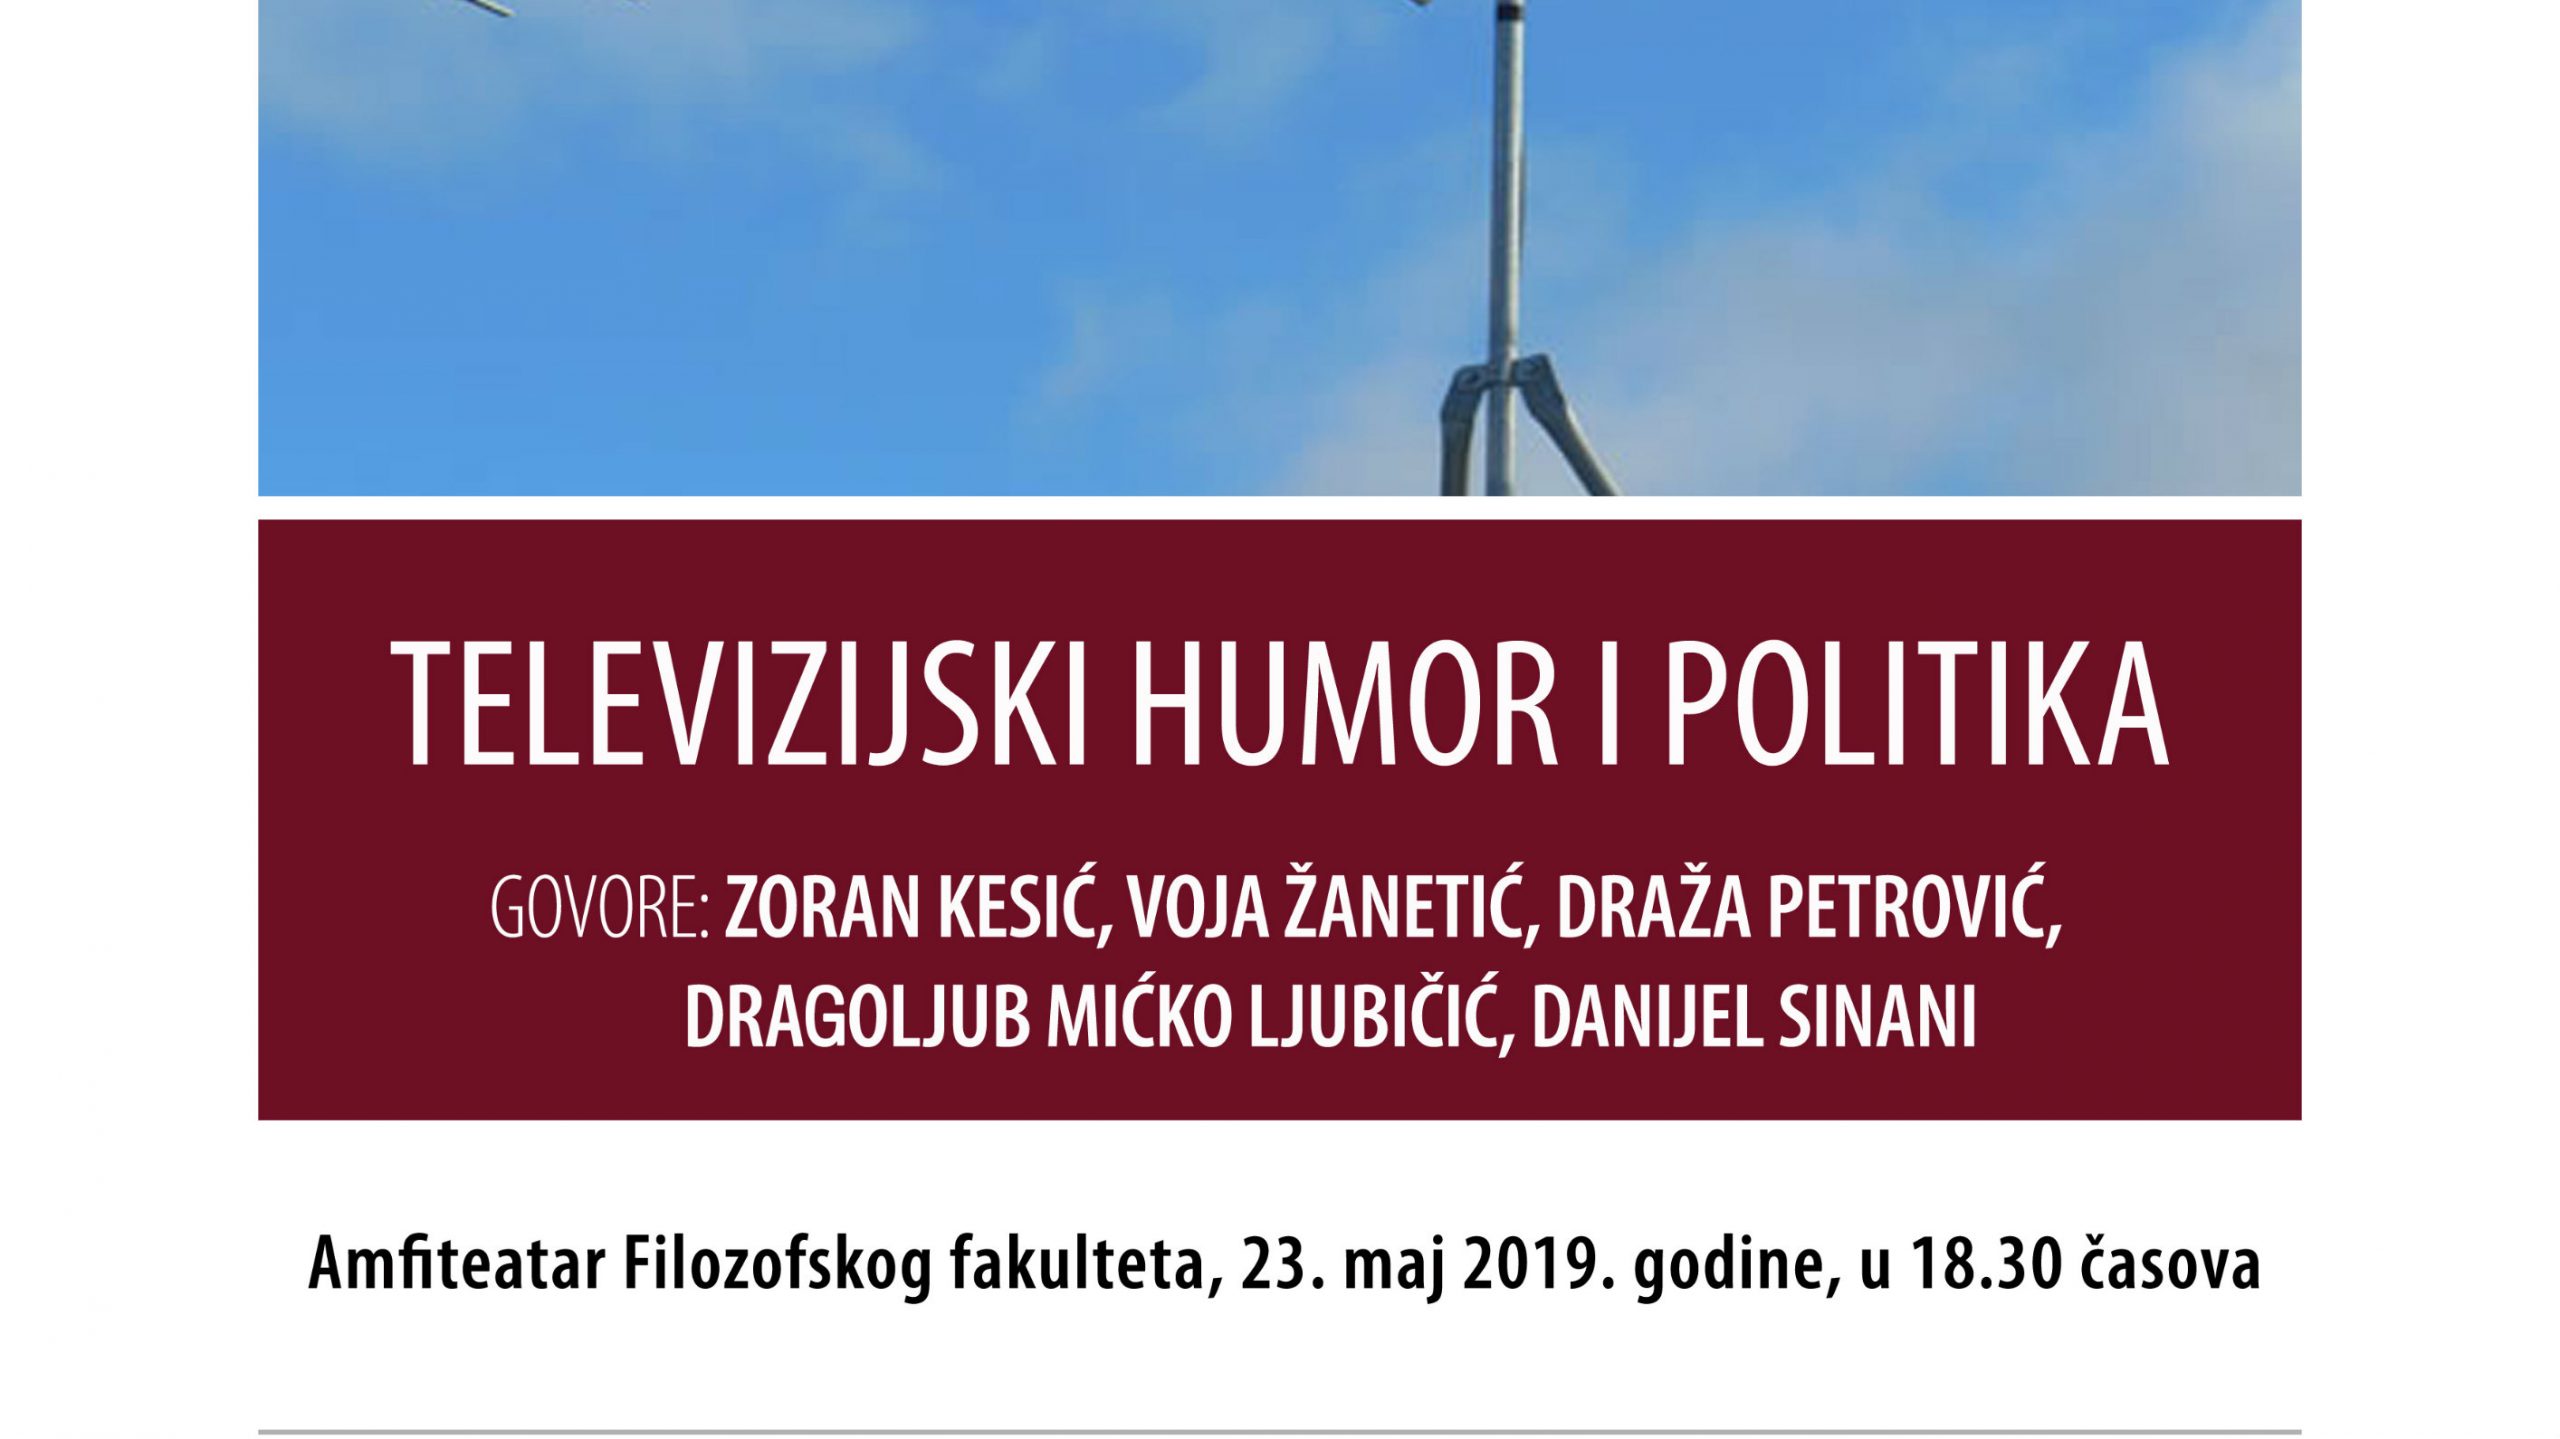 Tribina "Televizijski humor i politika" 23. maja na Filozofskom fakultetu 1